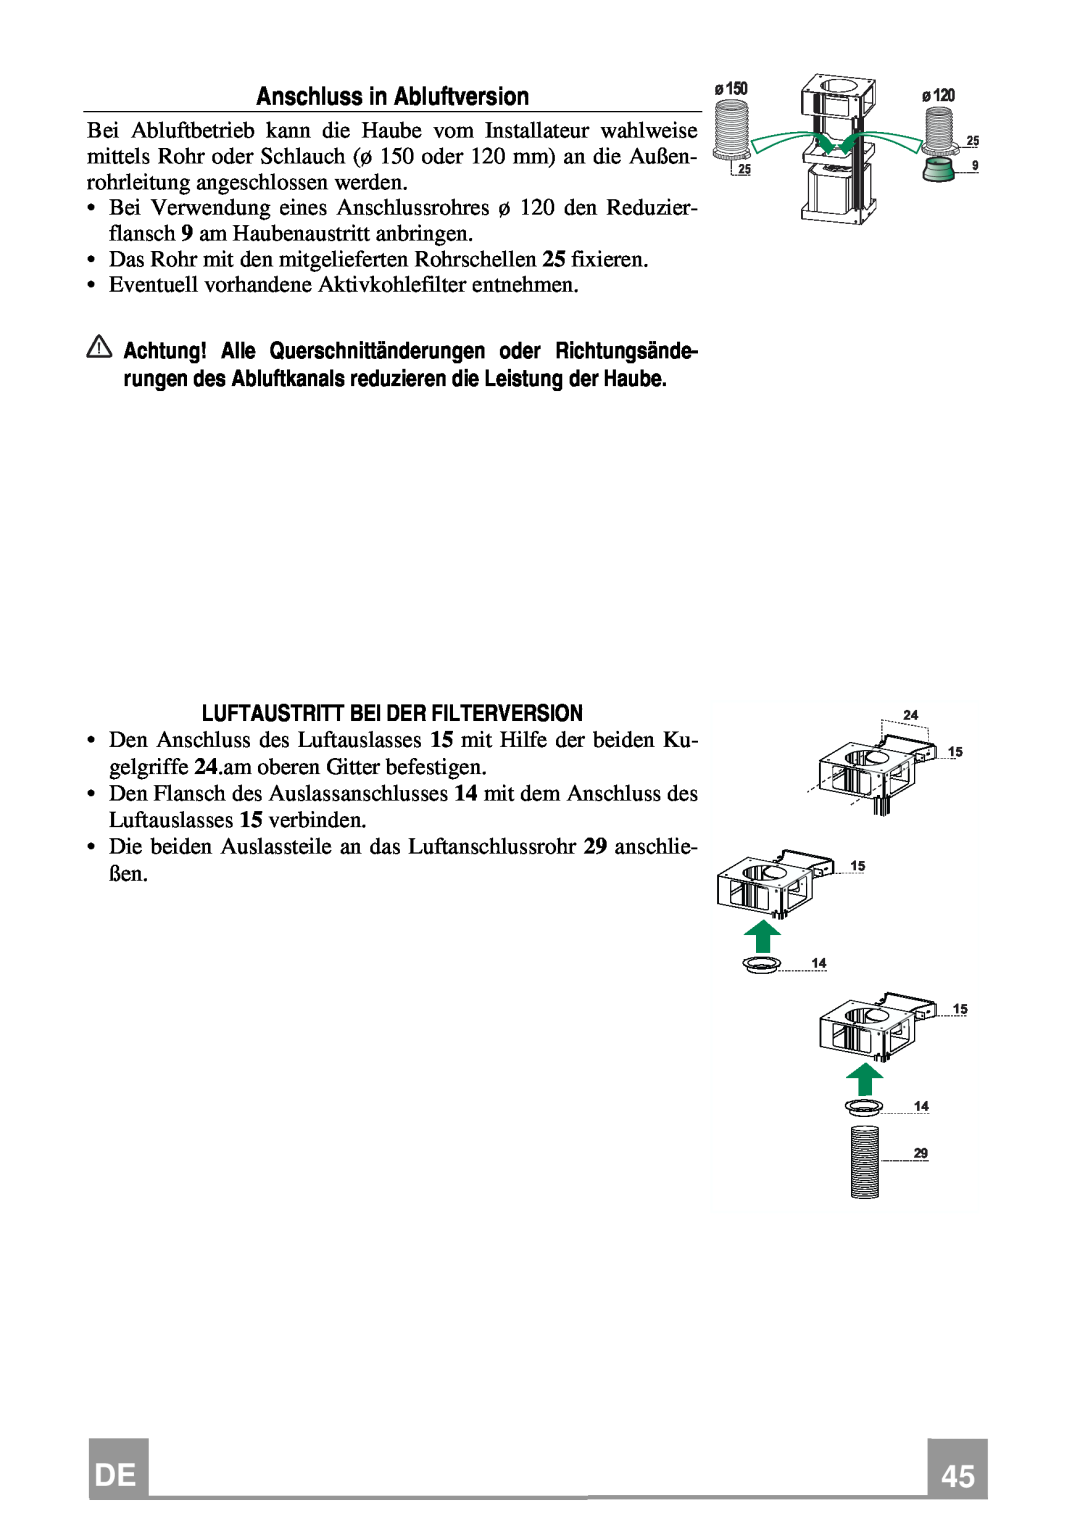 Franke Consumer Products FDMO 607 I manual Anschluss in Abluftversion, Luftaustritt Bei Der Filterversion 